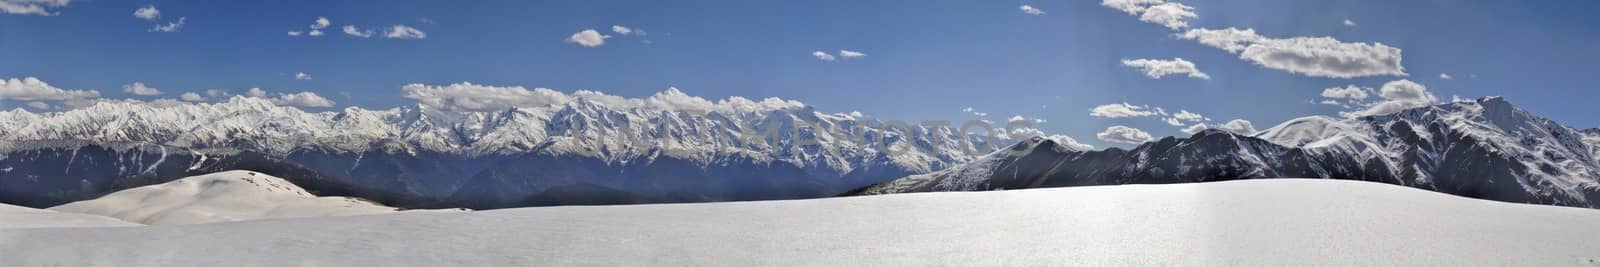 Scenic panorama of Caucasus mountains covered in snow, Svaneti, Georgia